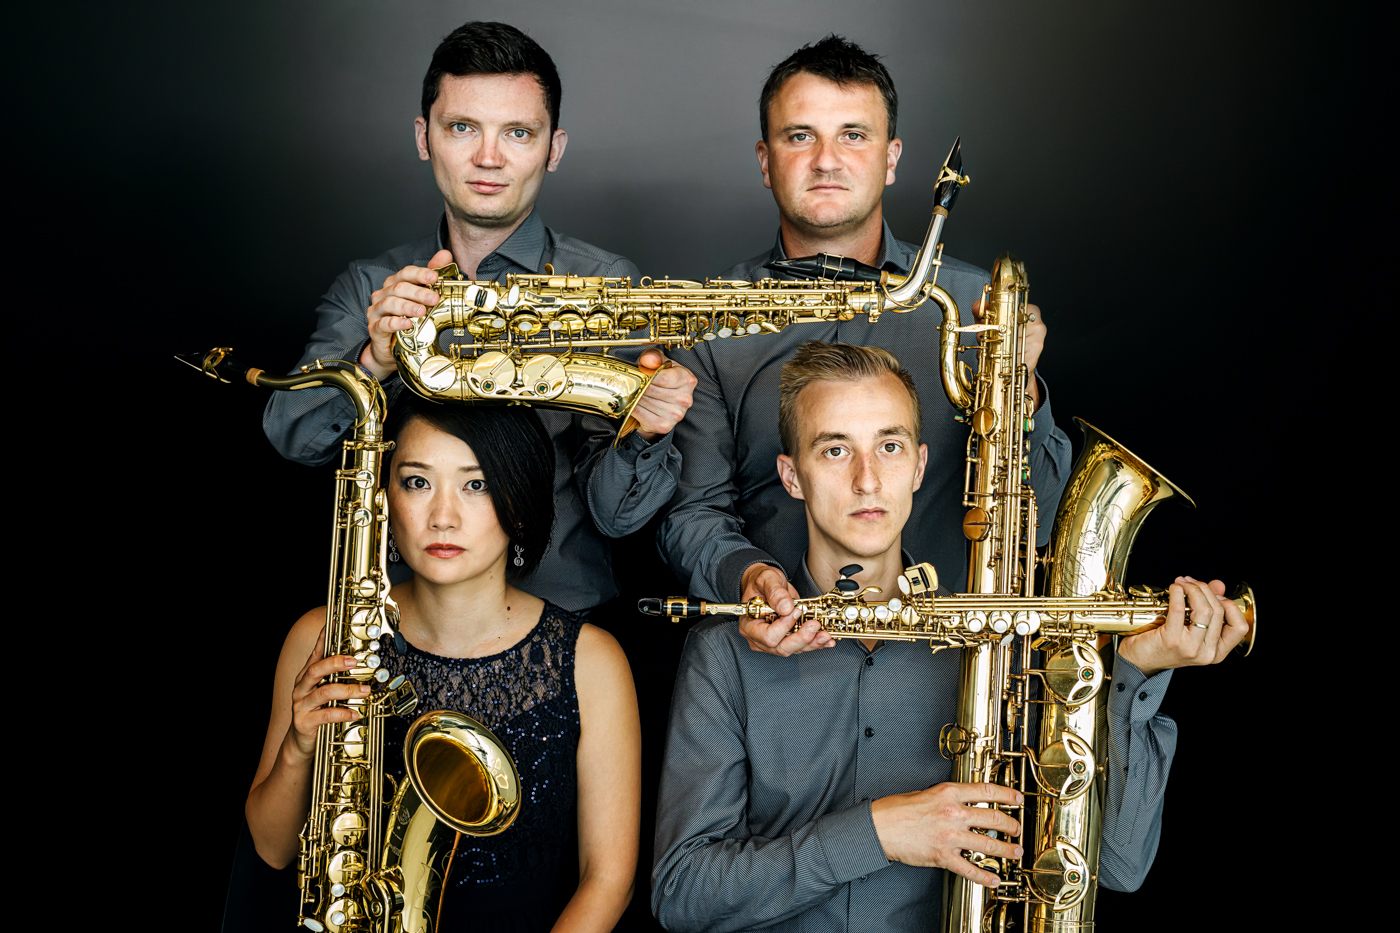 Mobilis Saxophone Quartet